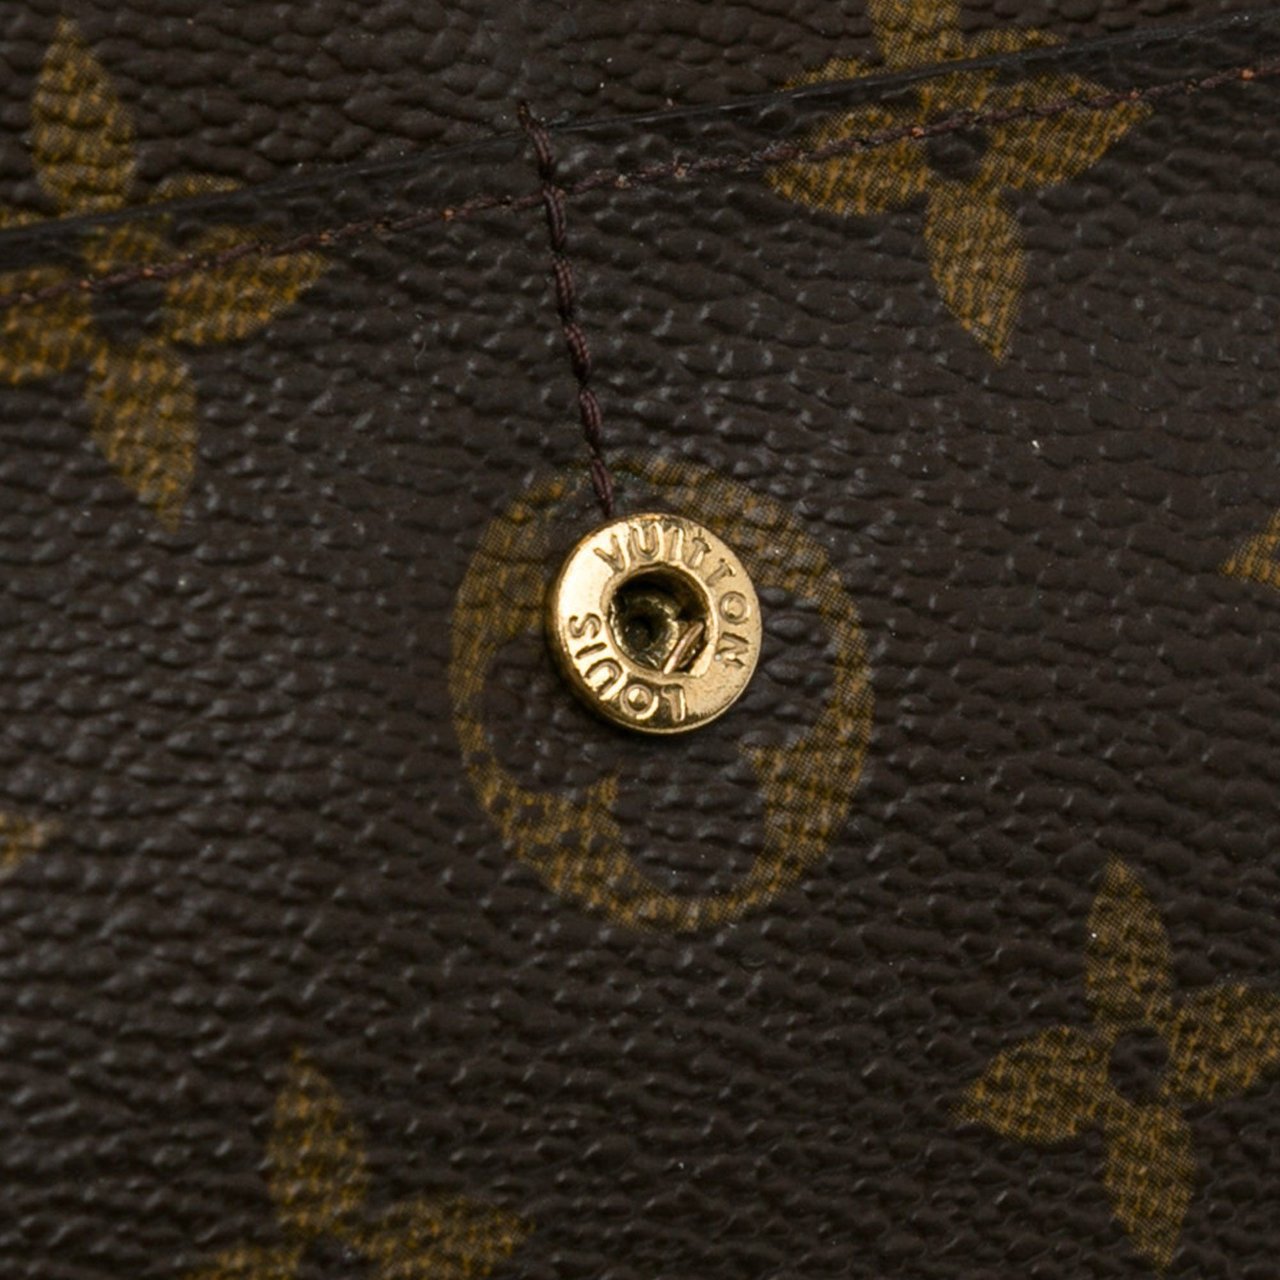 Louis Vuitton Monogram Sarah Long Wallet Bruin